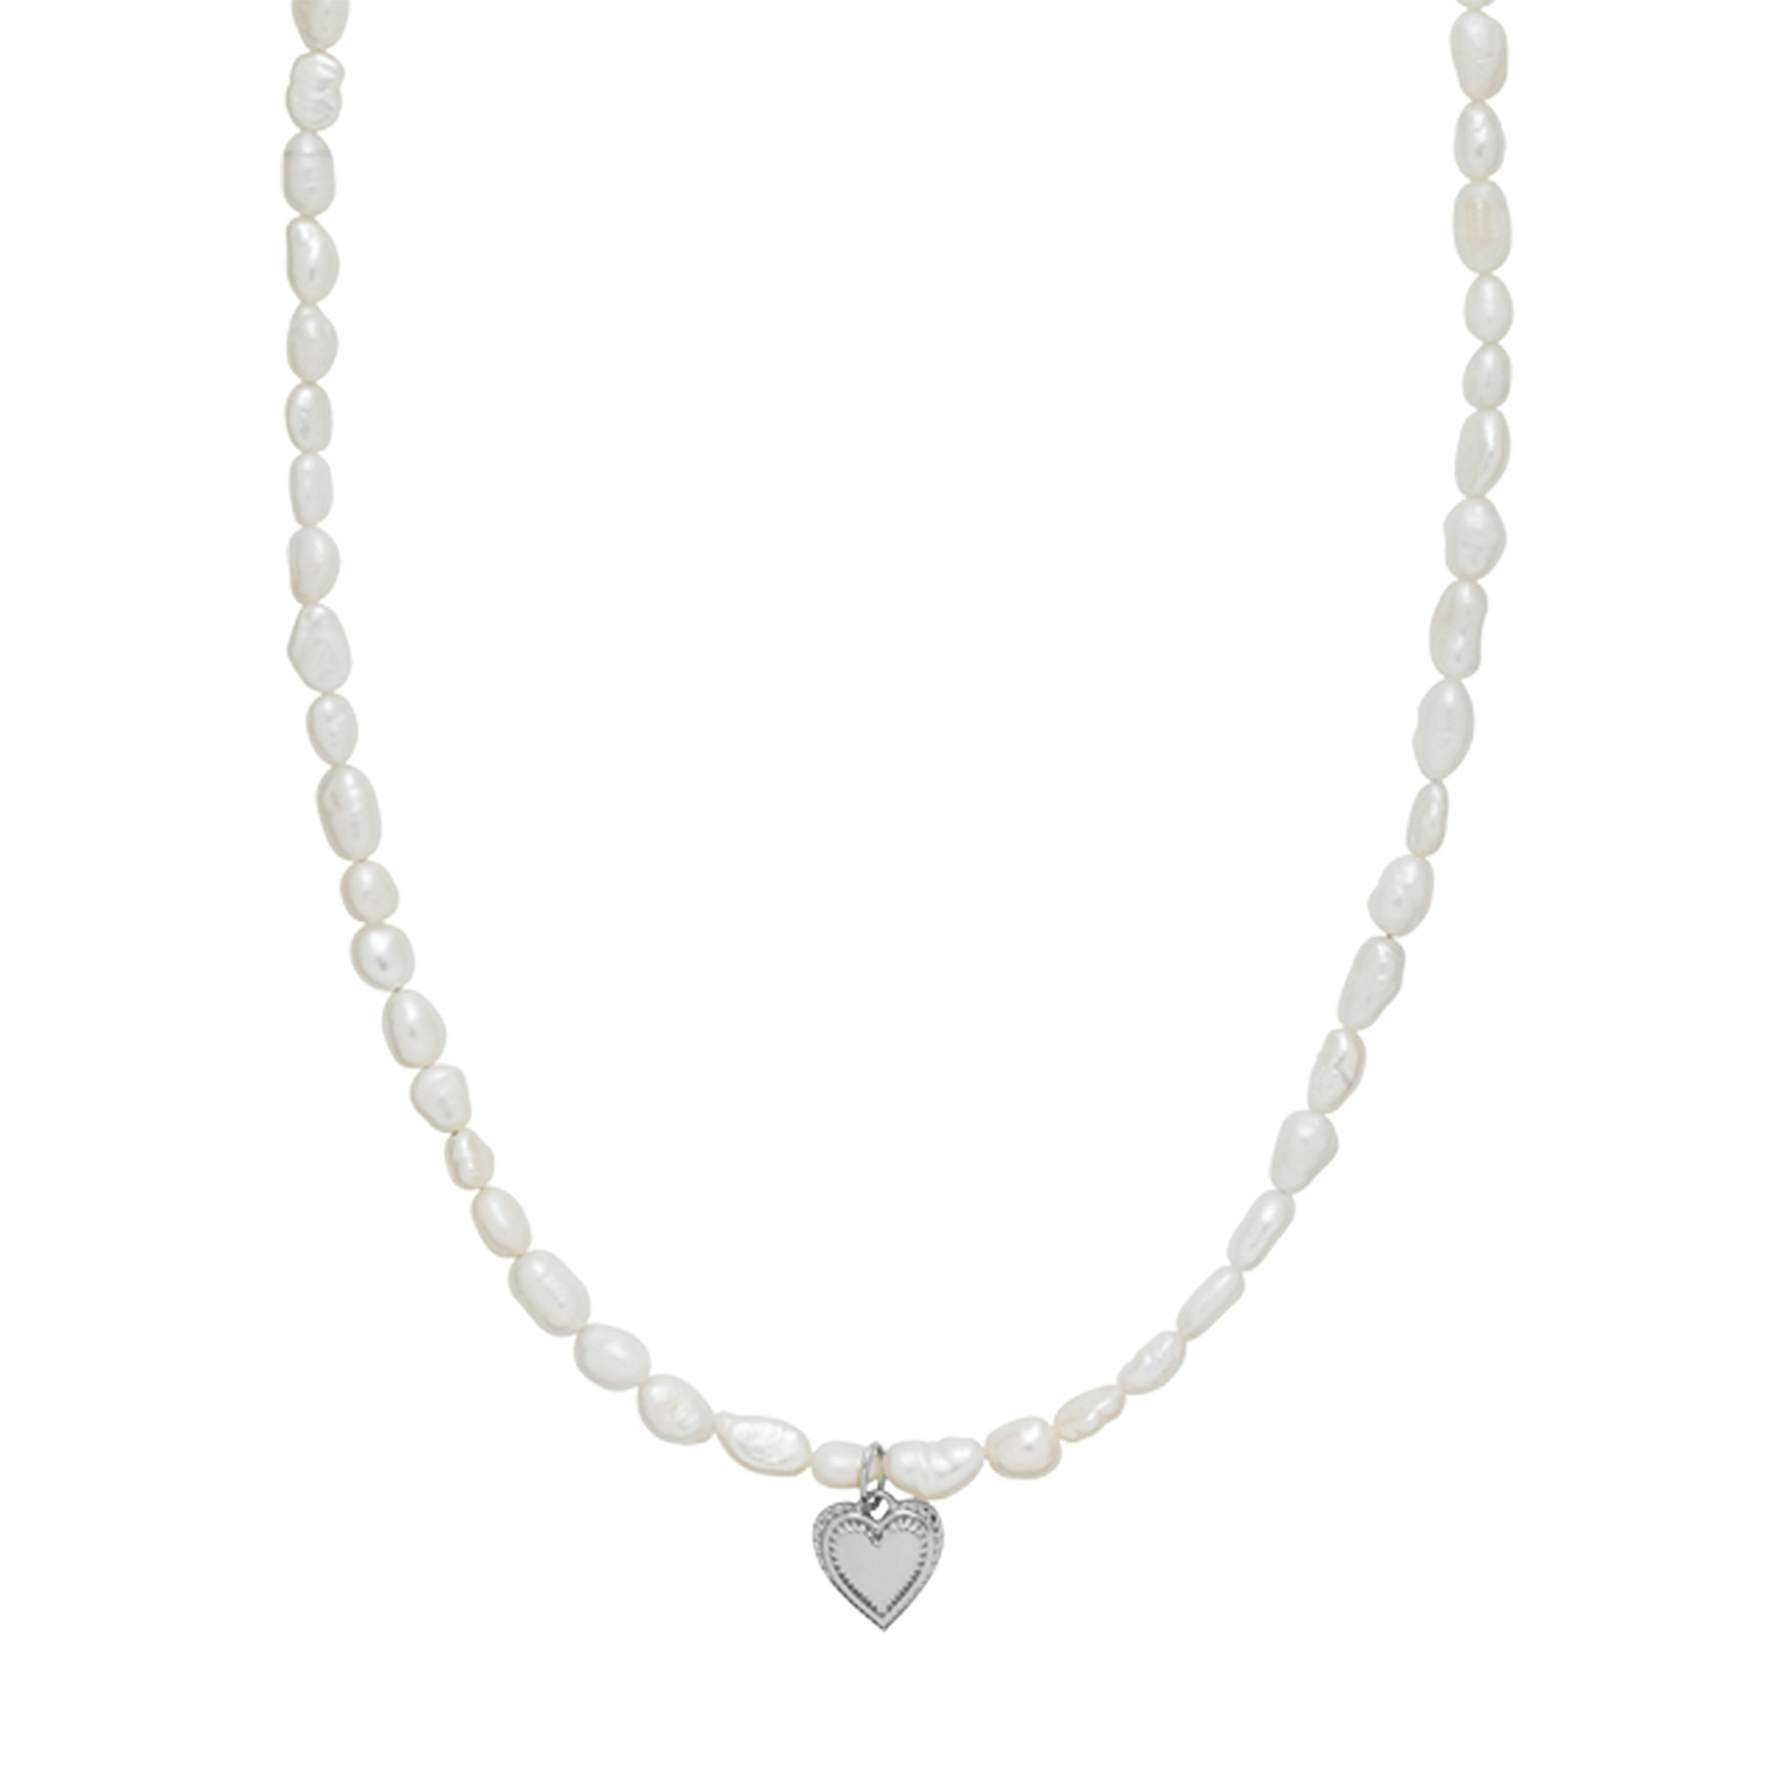 Anne-Sofie Krab x Sistie Heart Necklace from Sistie in Silver Sterling 925